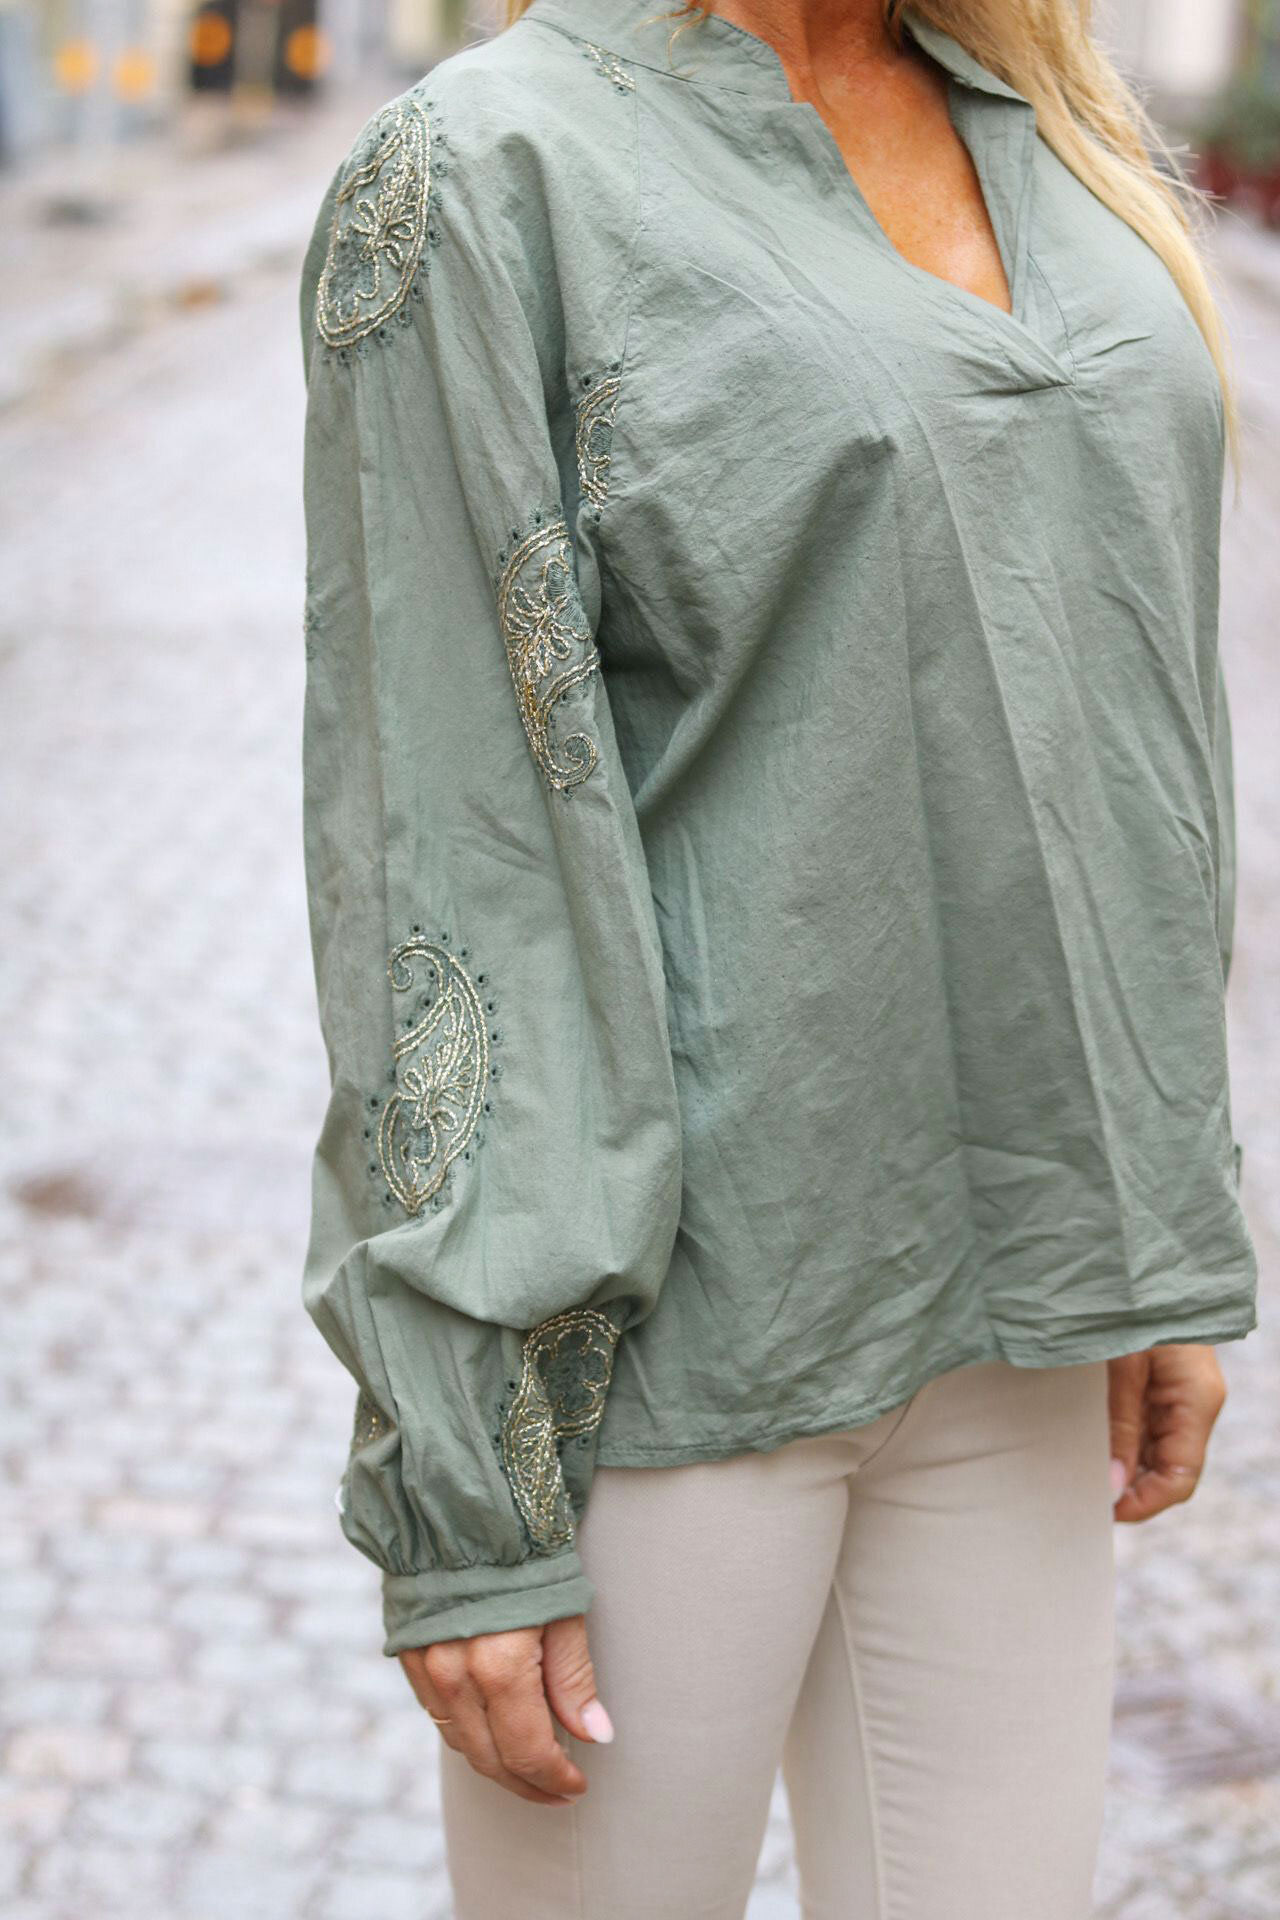 Elisabeth Cotton blouse - Gold embroidery - Khaki